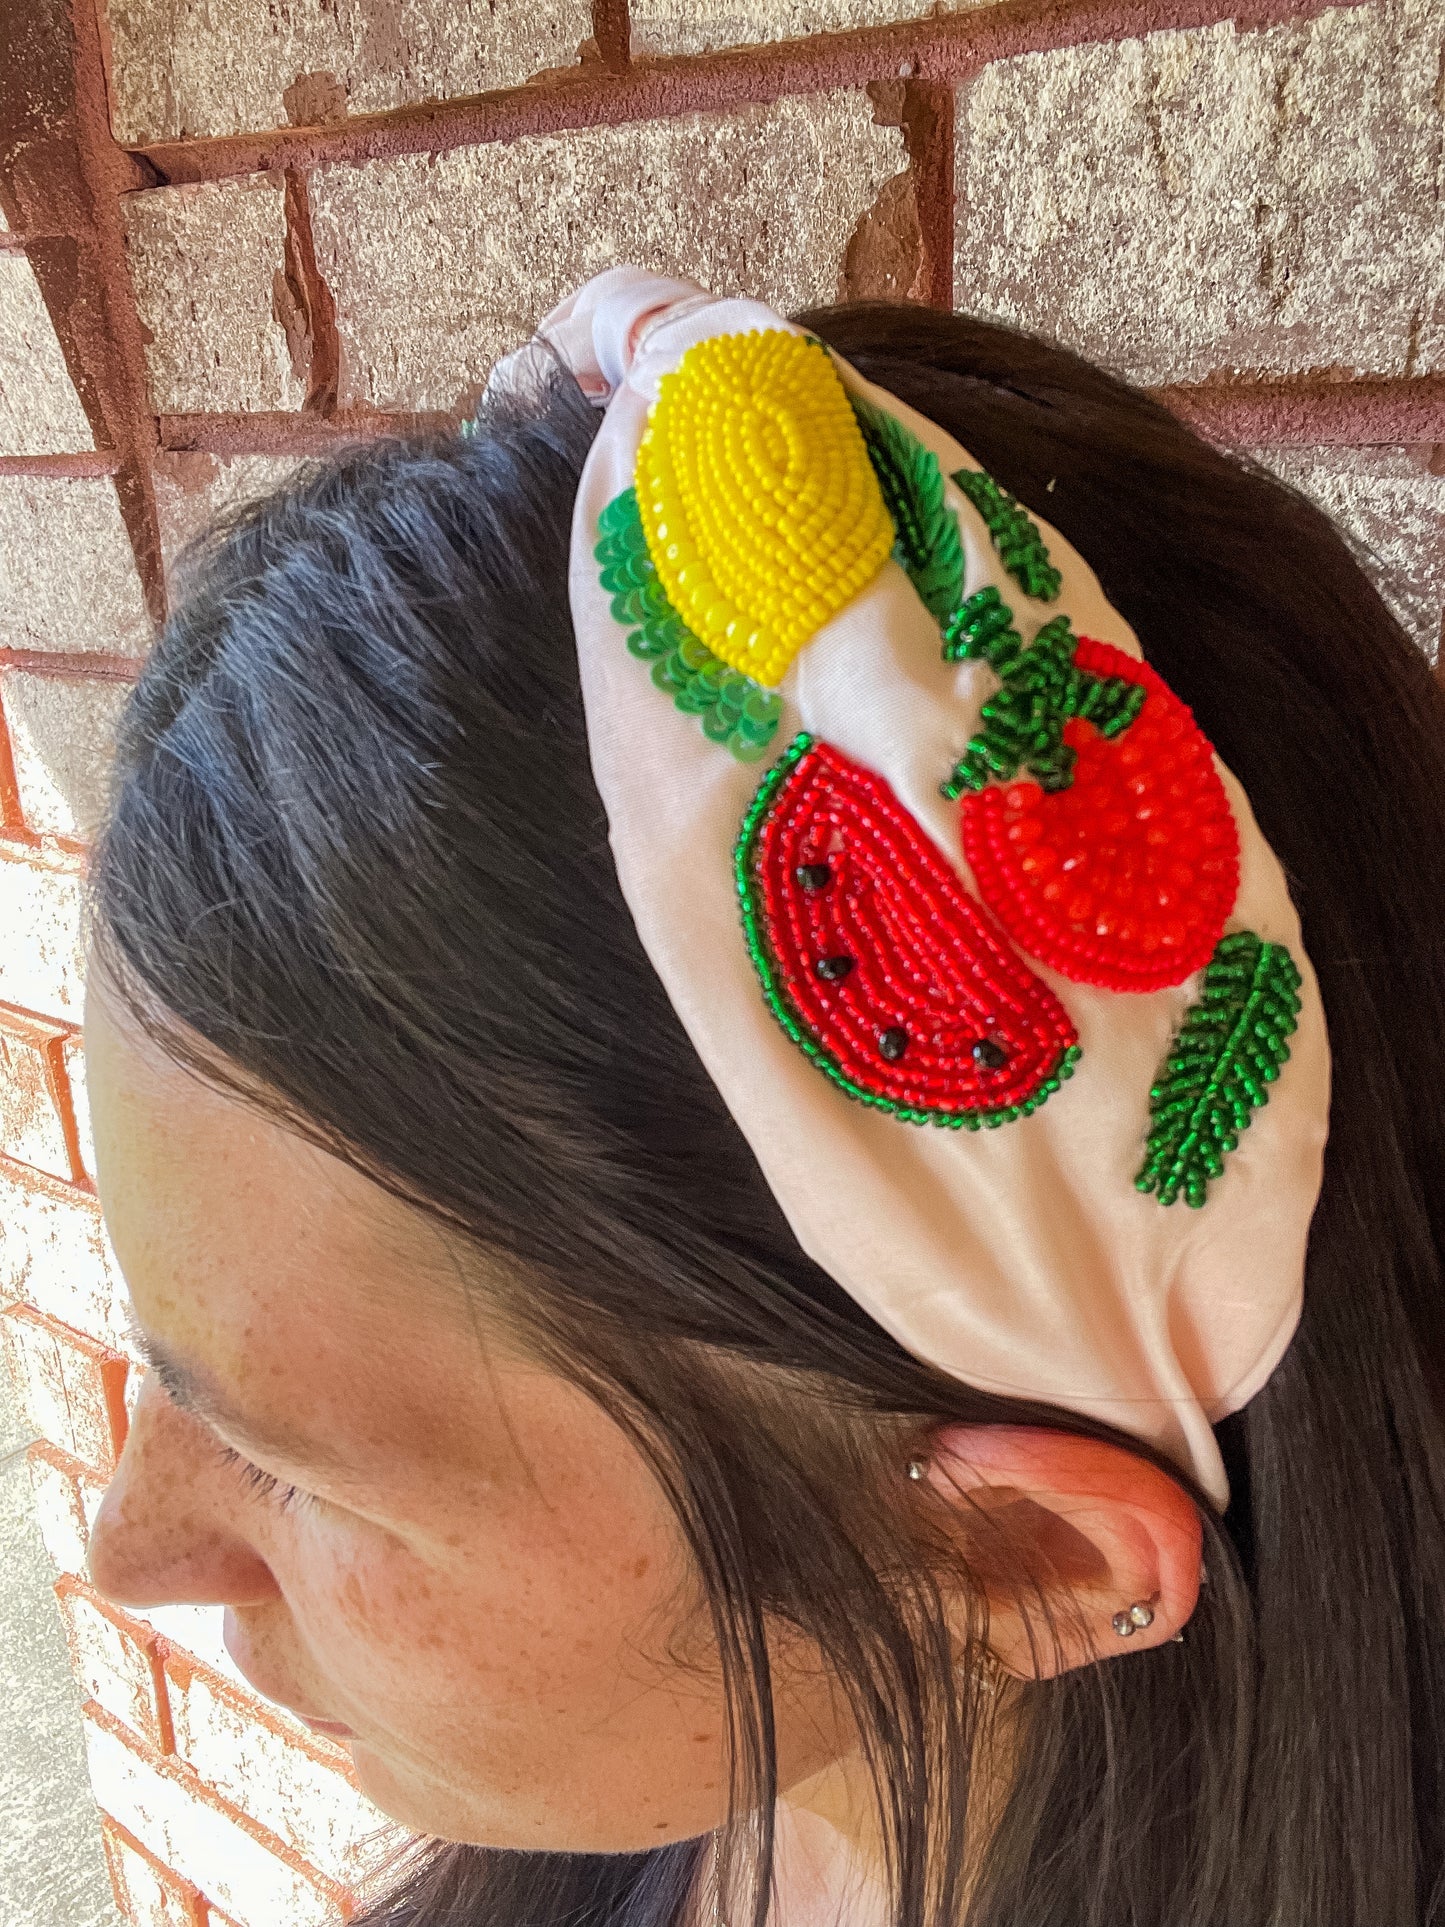 Give me the fruit headband